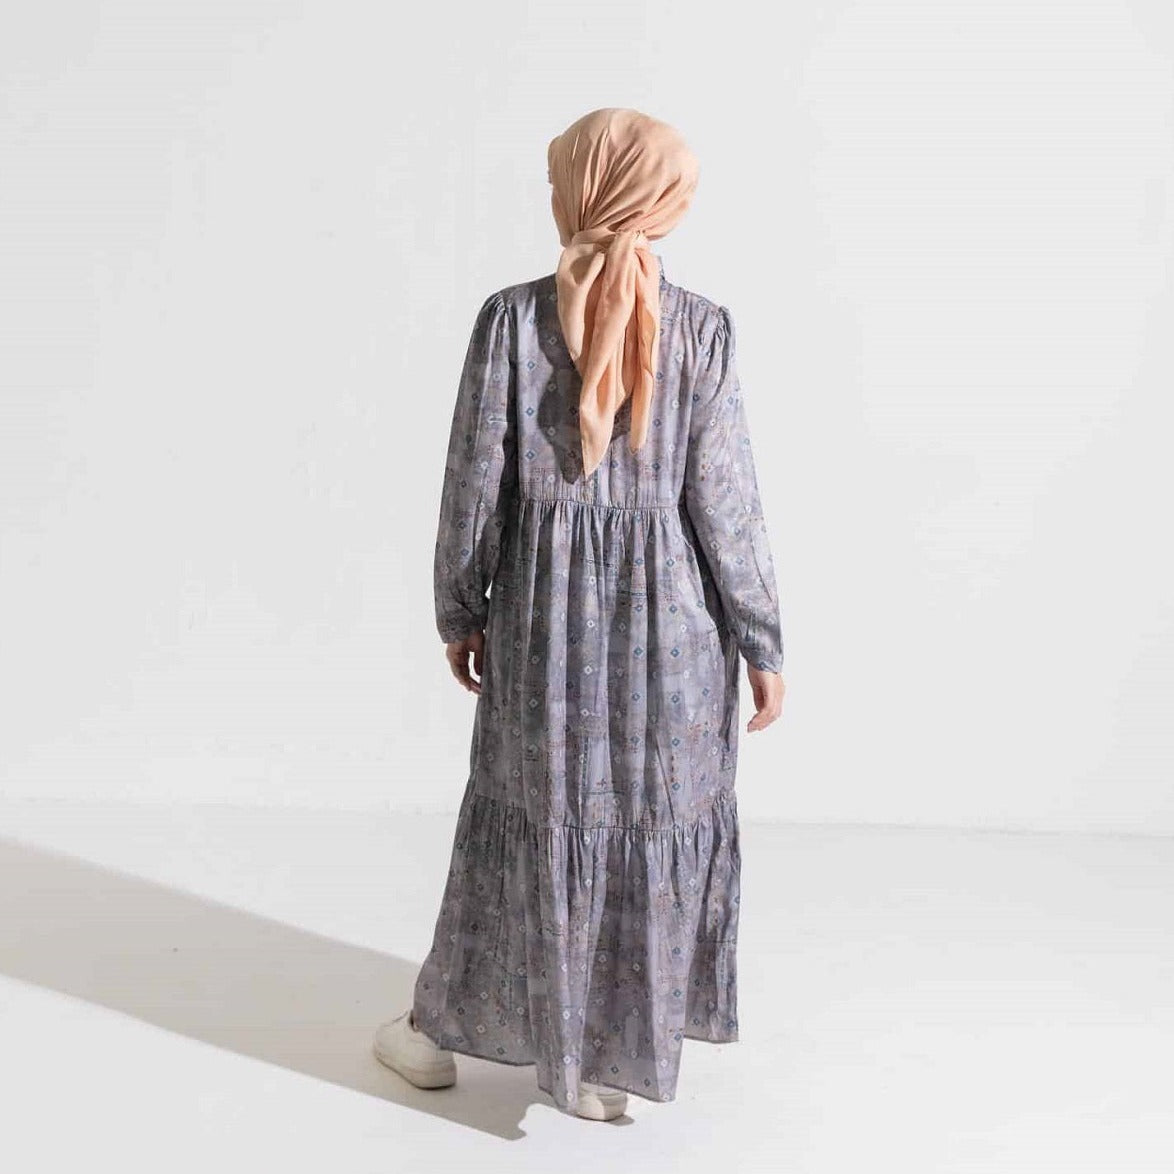 Dress Wanita Muslim Dauky Gamis L Dress Bohe Series - Silvergrey